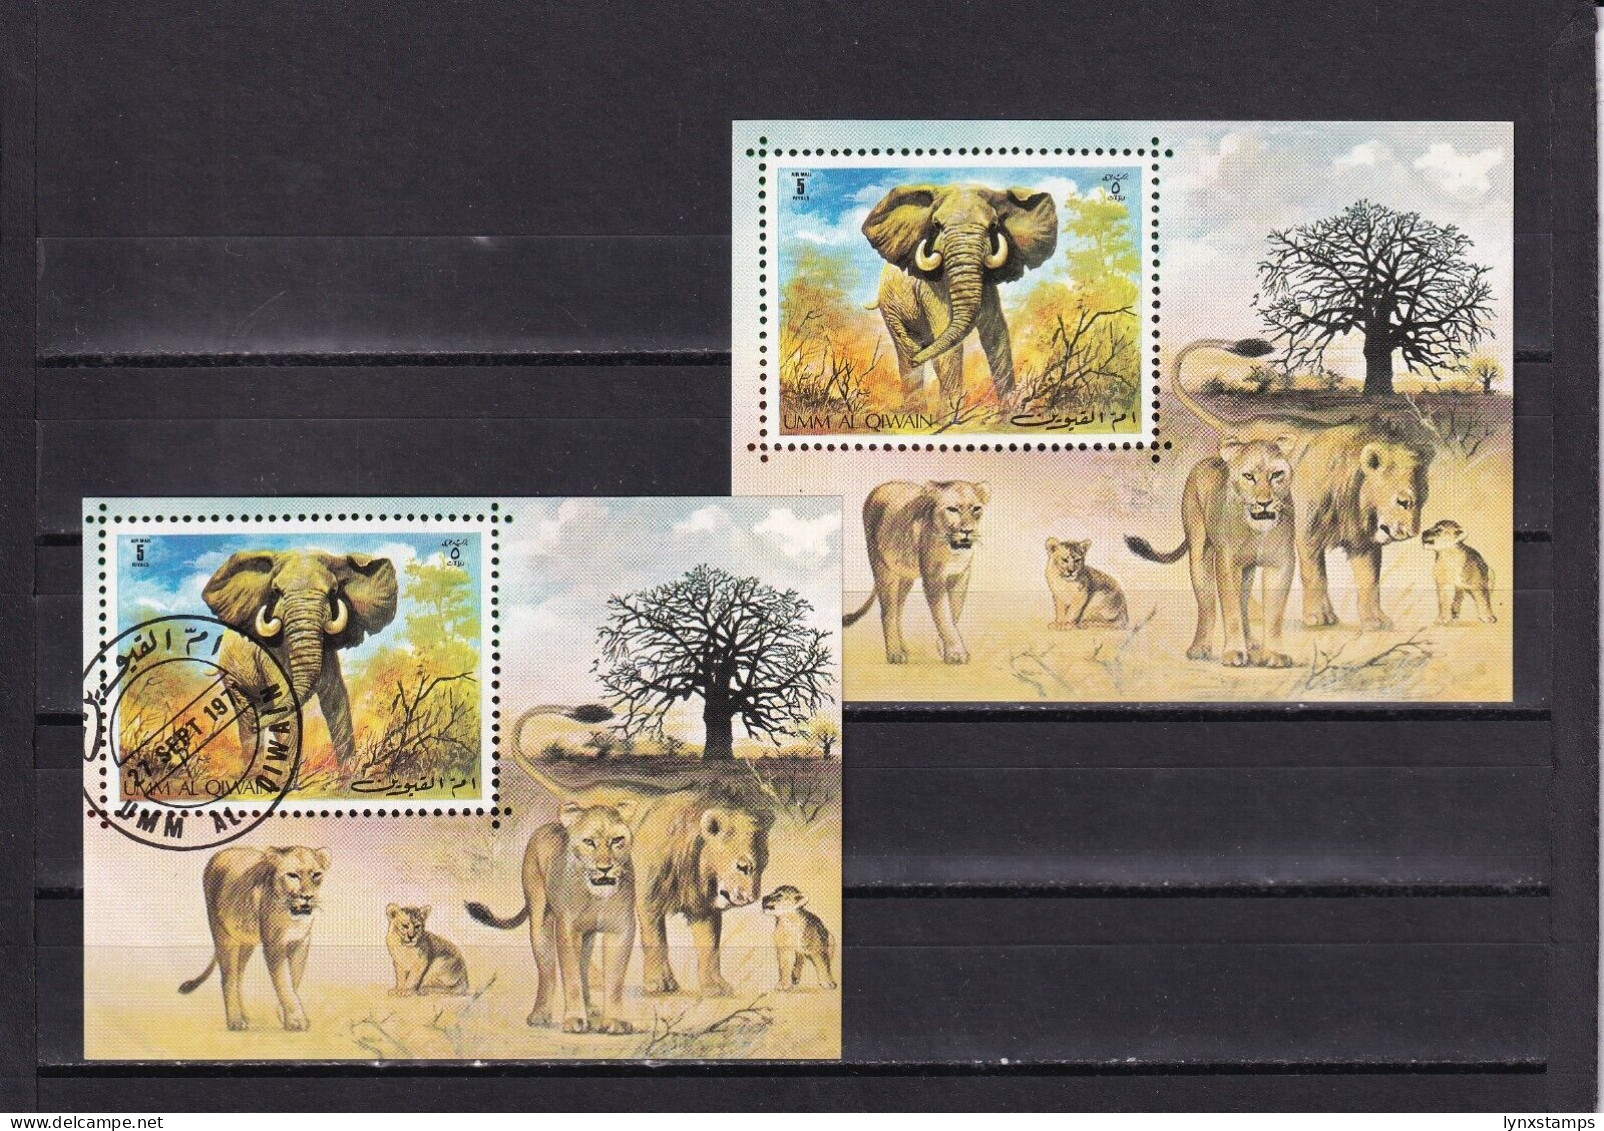 SA03 Umm Al Qiwain UAE 1971 Minisheet With Elephants Used And Mint - Olifanten